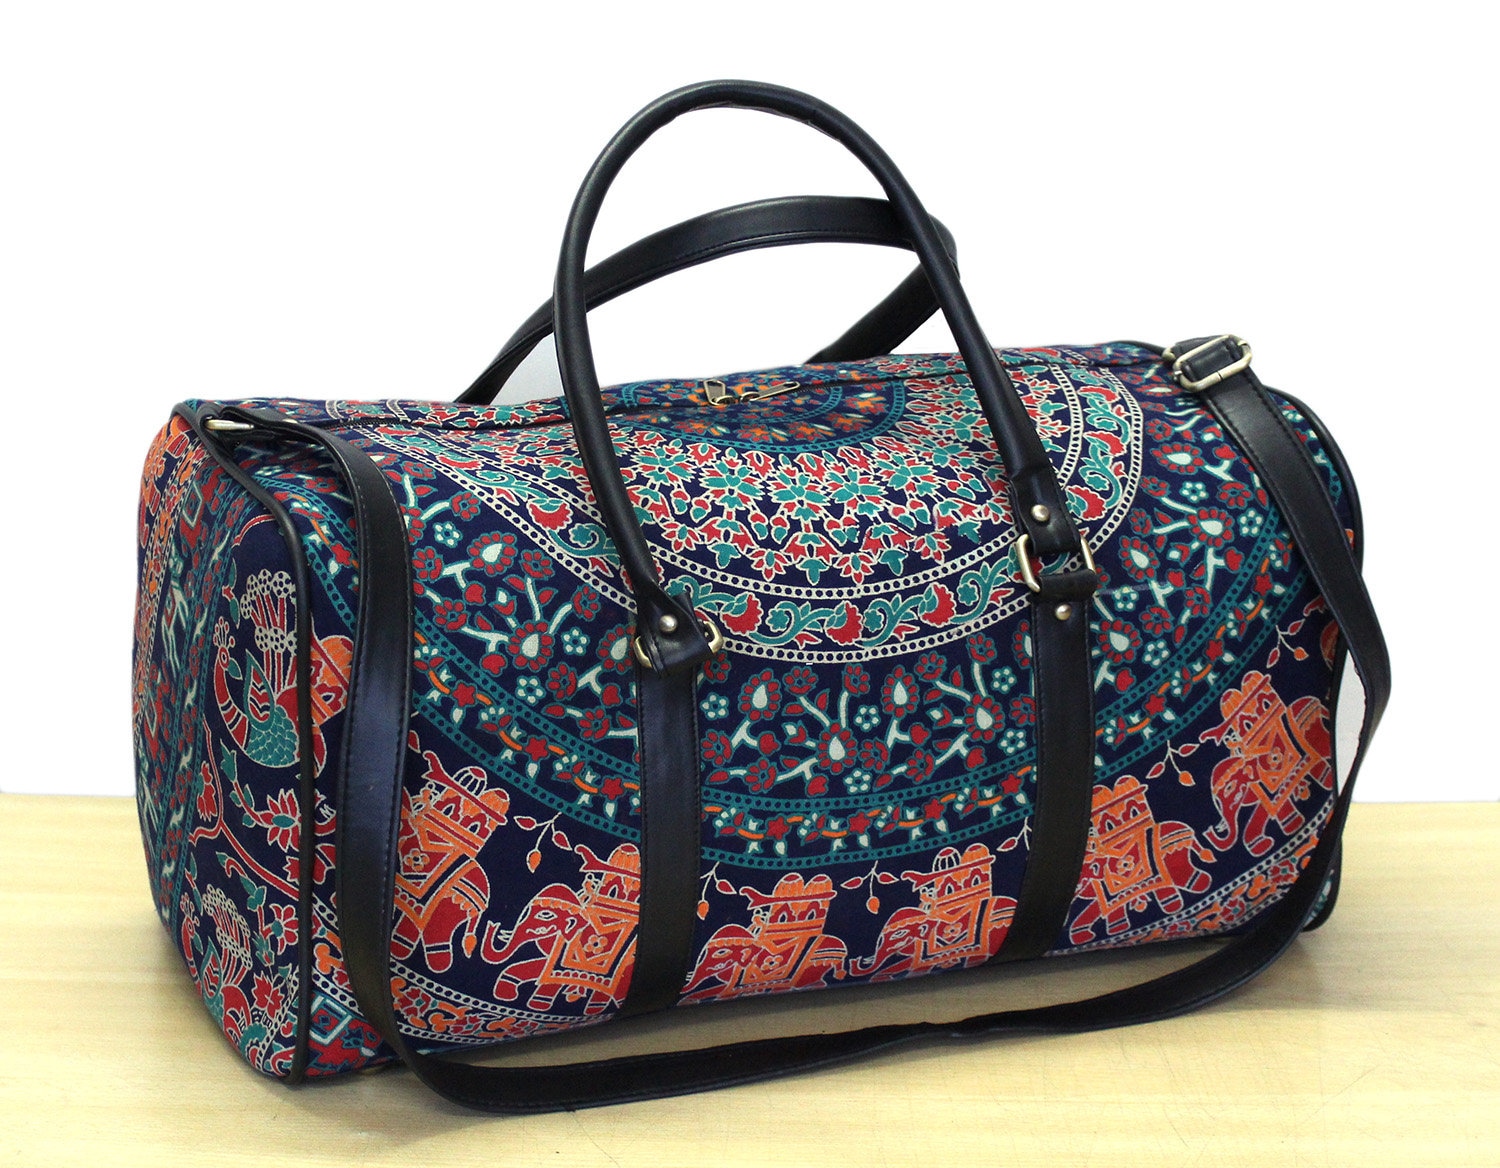 Women’s Travel Bag, Duffle Bag New Mandala Dufle Large Bag, Boho Bag,  Mandala Bag, Weekend Bag, Carry On, Tote Tribal Weekender Bag